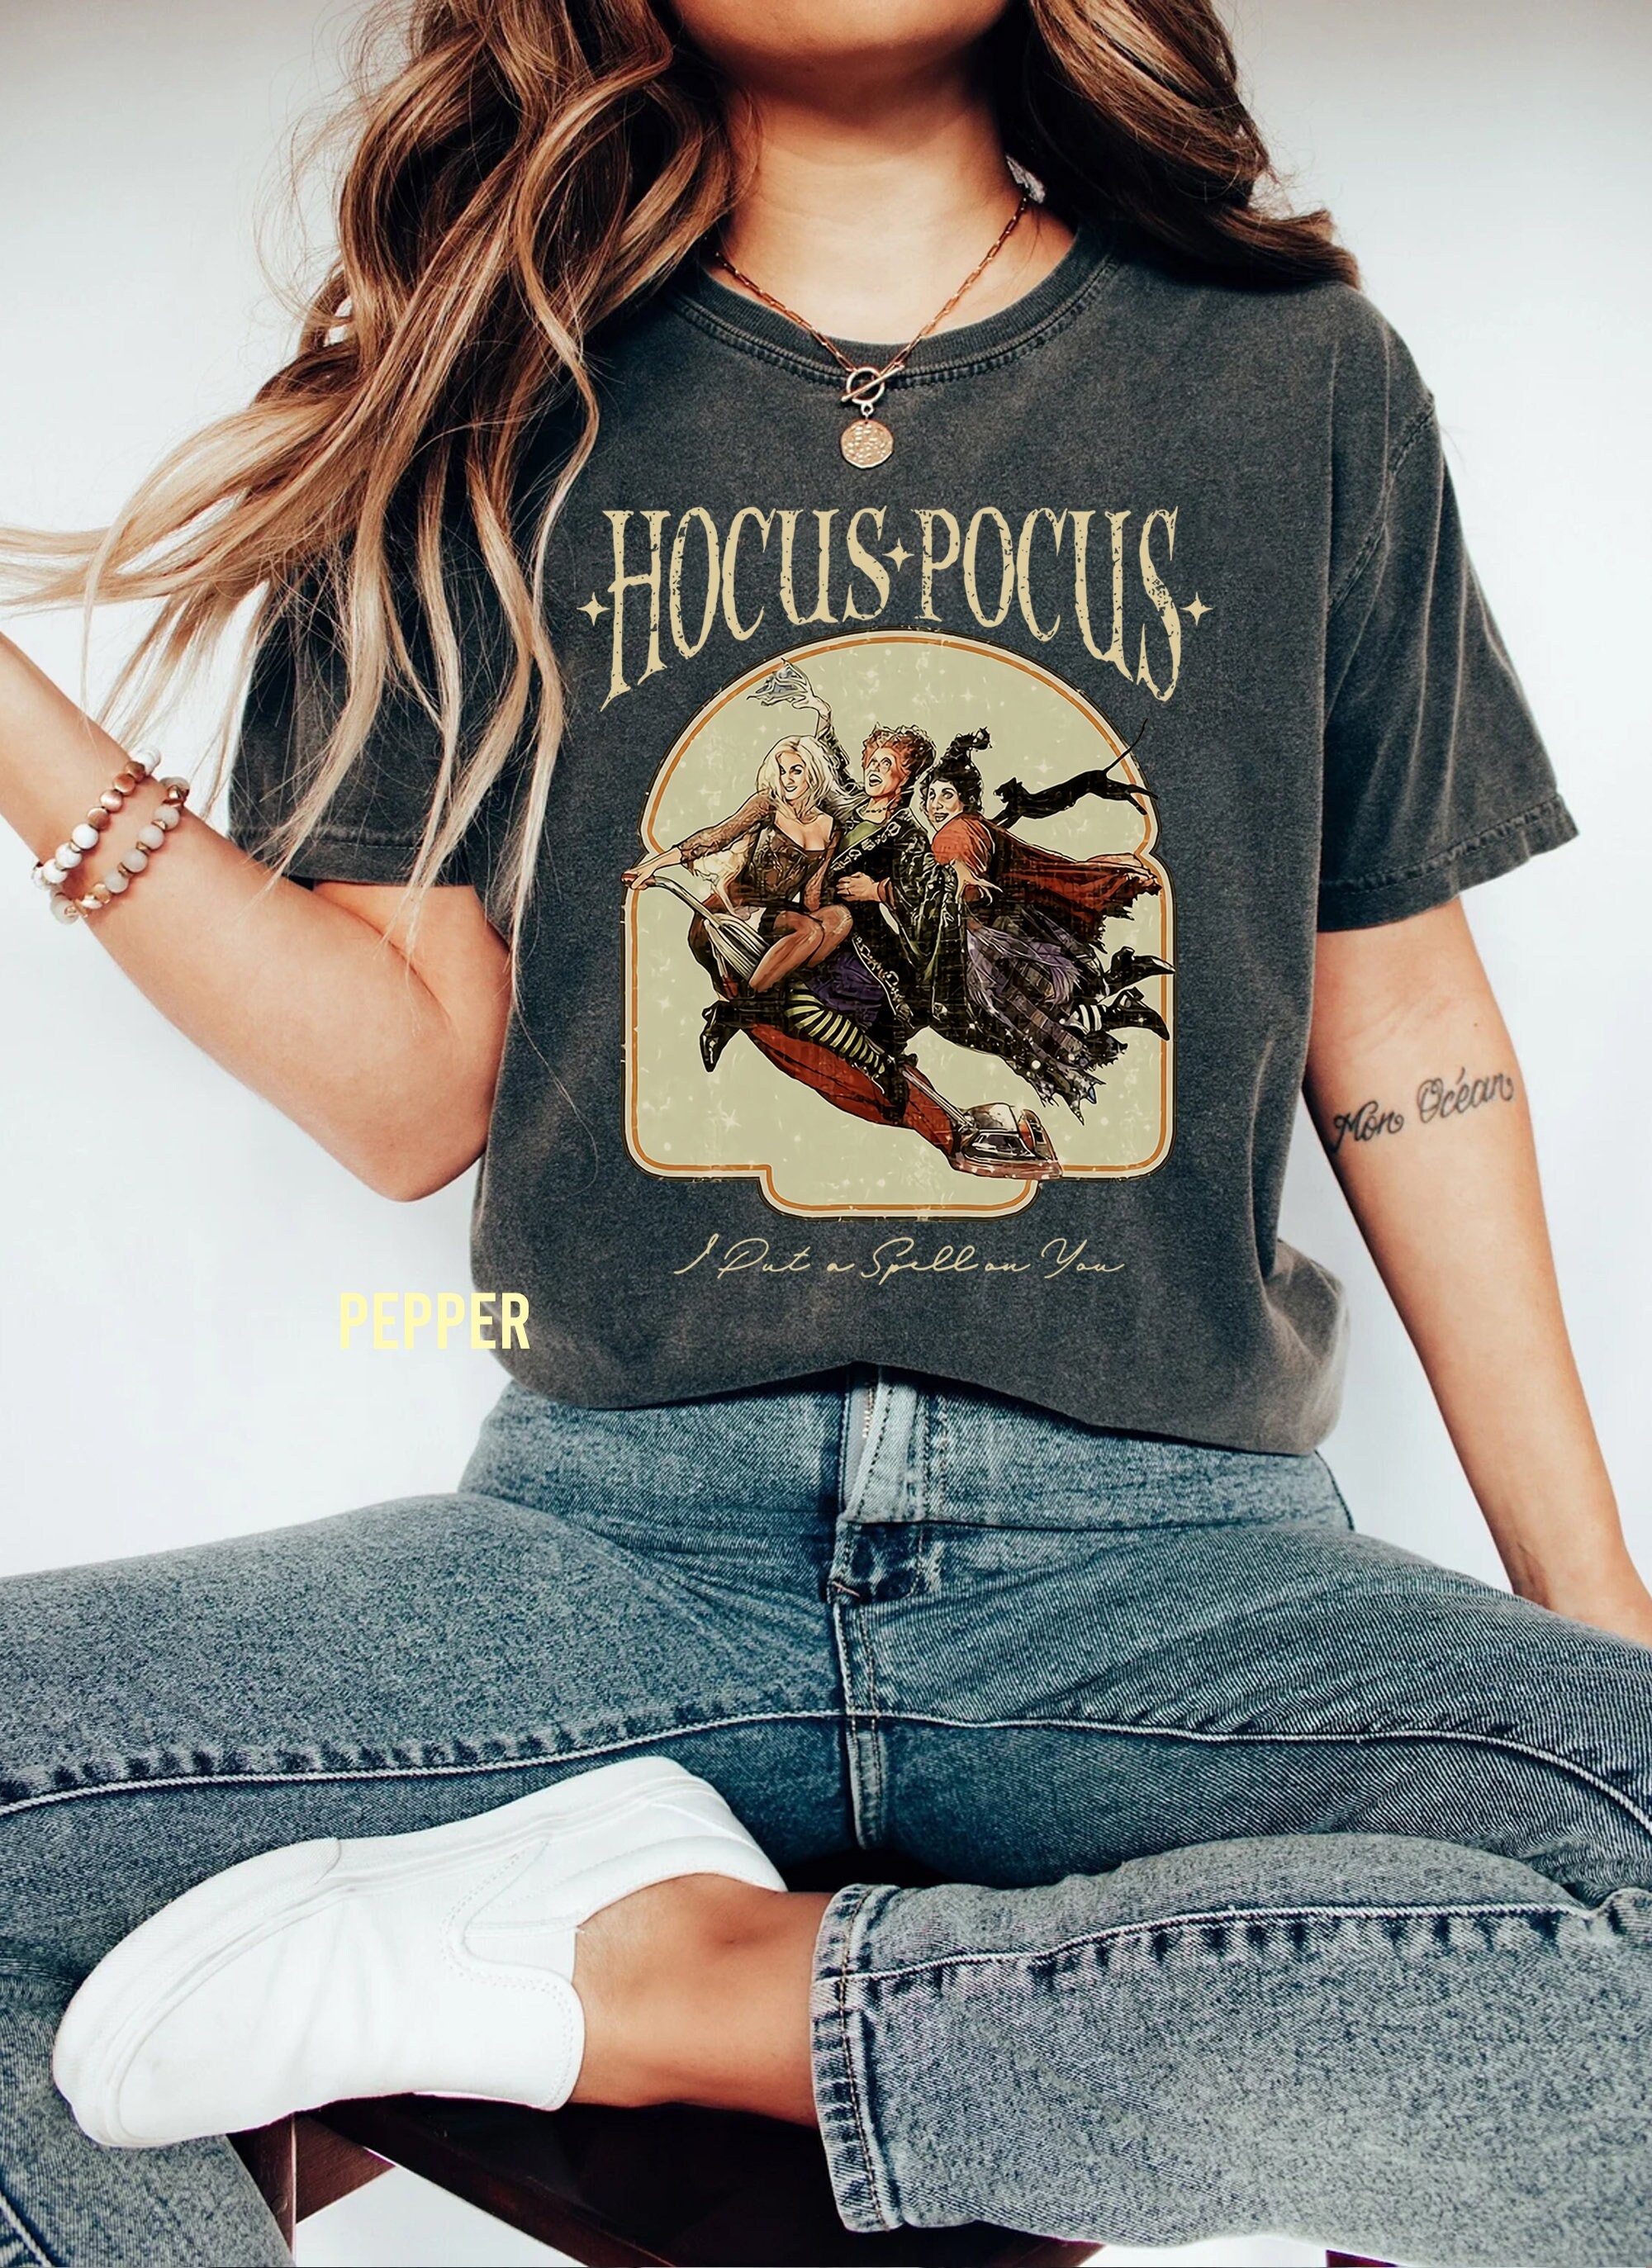 Discover Hocus Pocus T-Shirt, Sanderson Sisters Shirt, Horror Movie Shirt, Hallowen Gifts, Halloween Party, Vintage Halloween Shirt